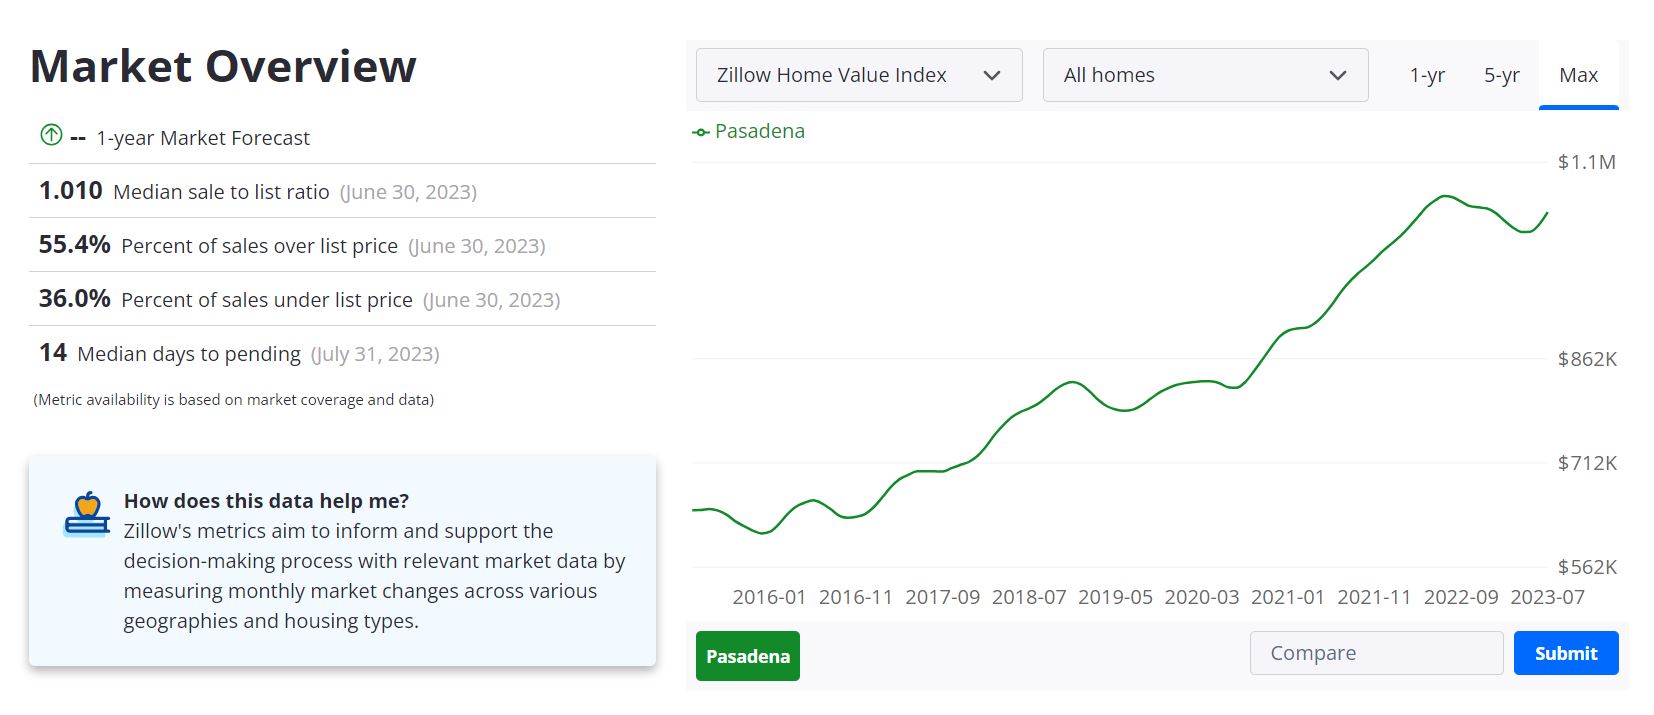 Pasadena Housing Market Forecast 2023-2024